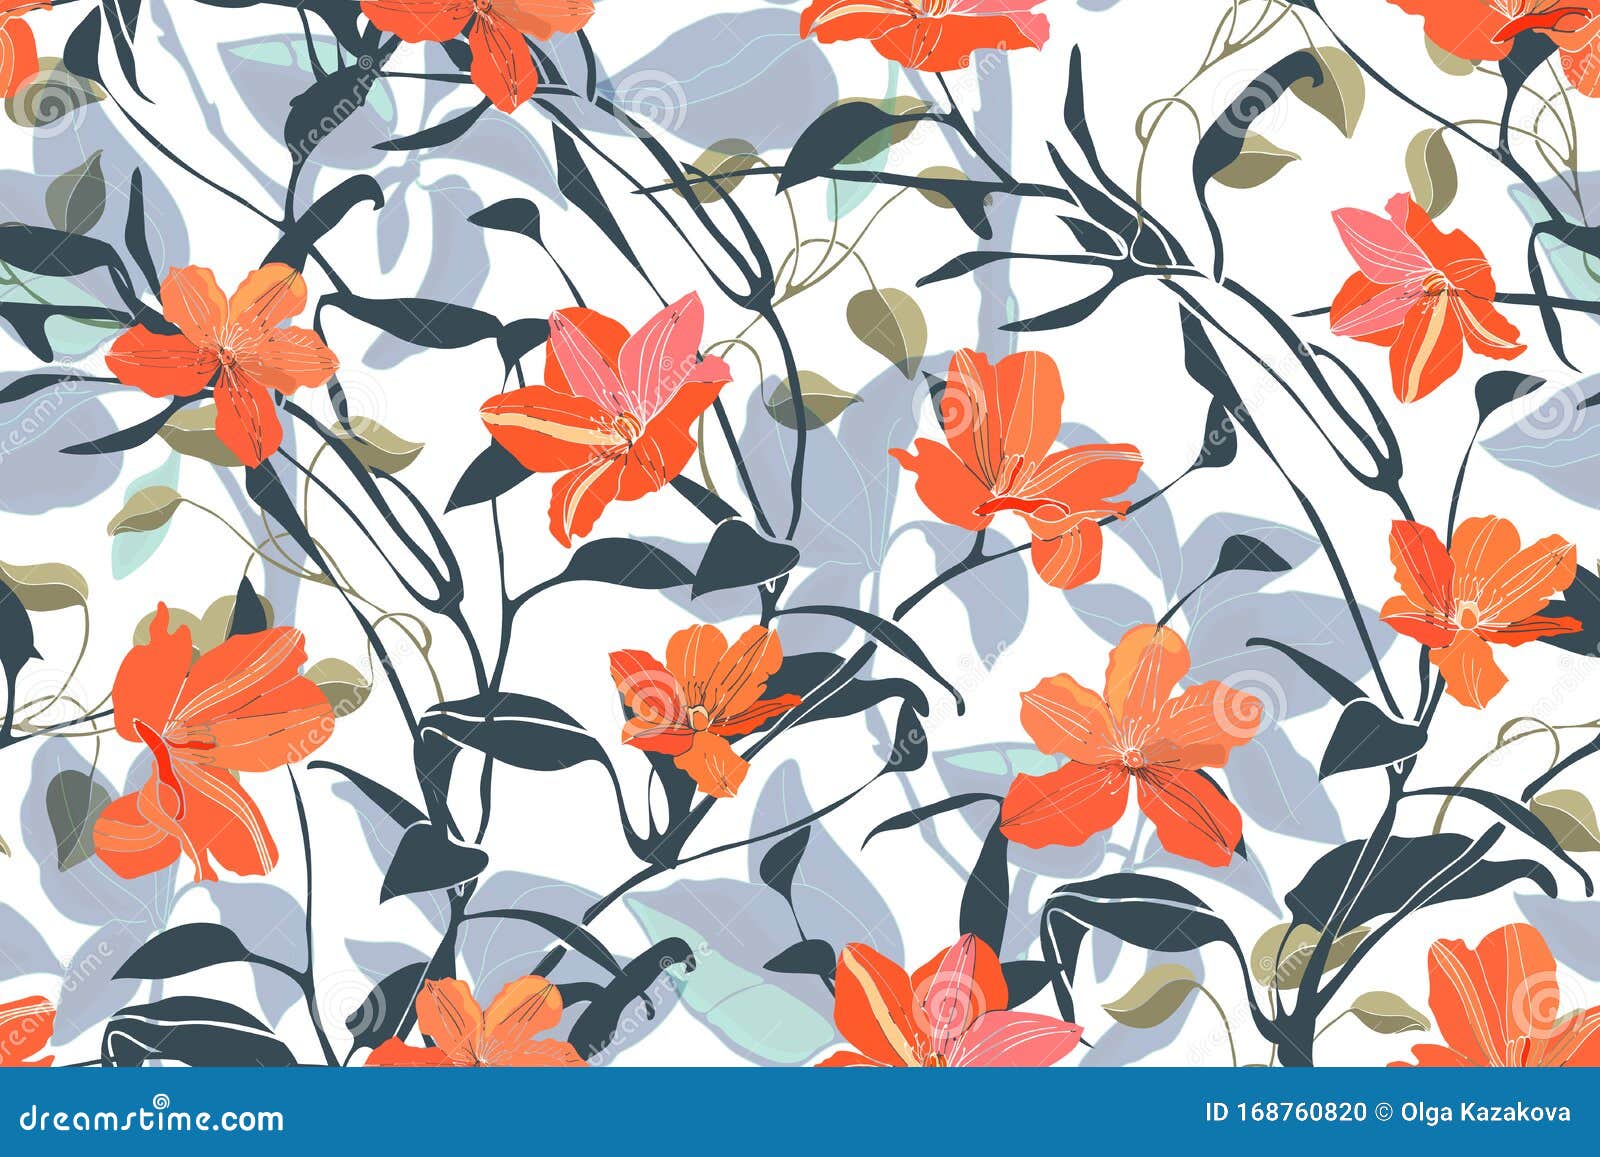 Art Floral Vector Seamless Pattern. Orange Flowers Isolated on White  Background. Stock Illustration - Illustration of pattern, japanese:  168760820